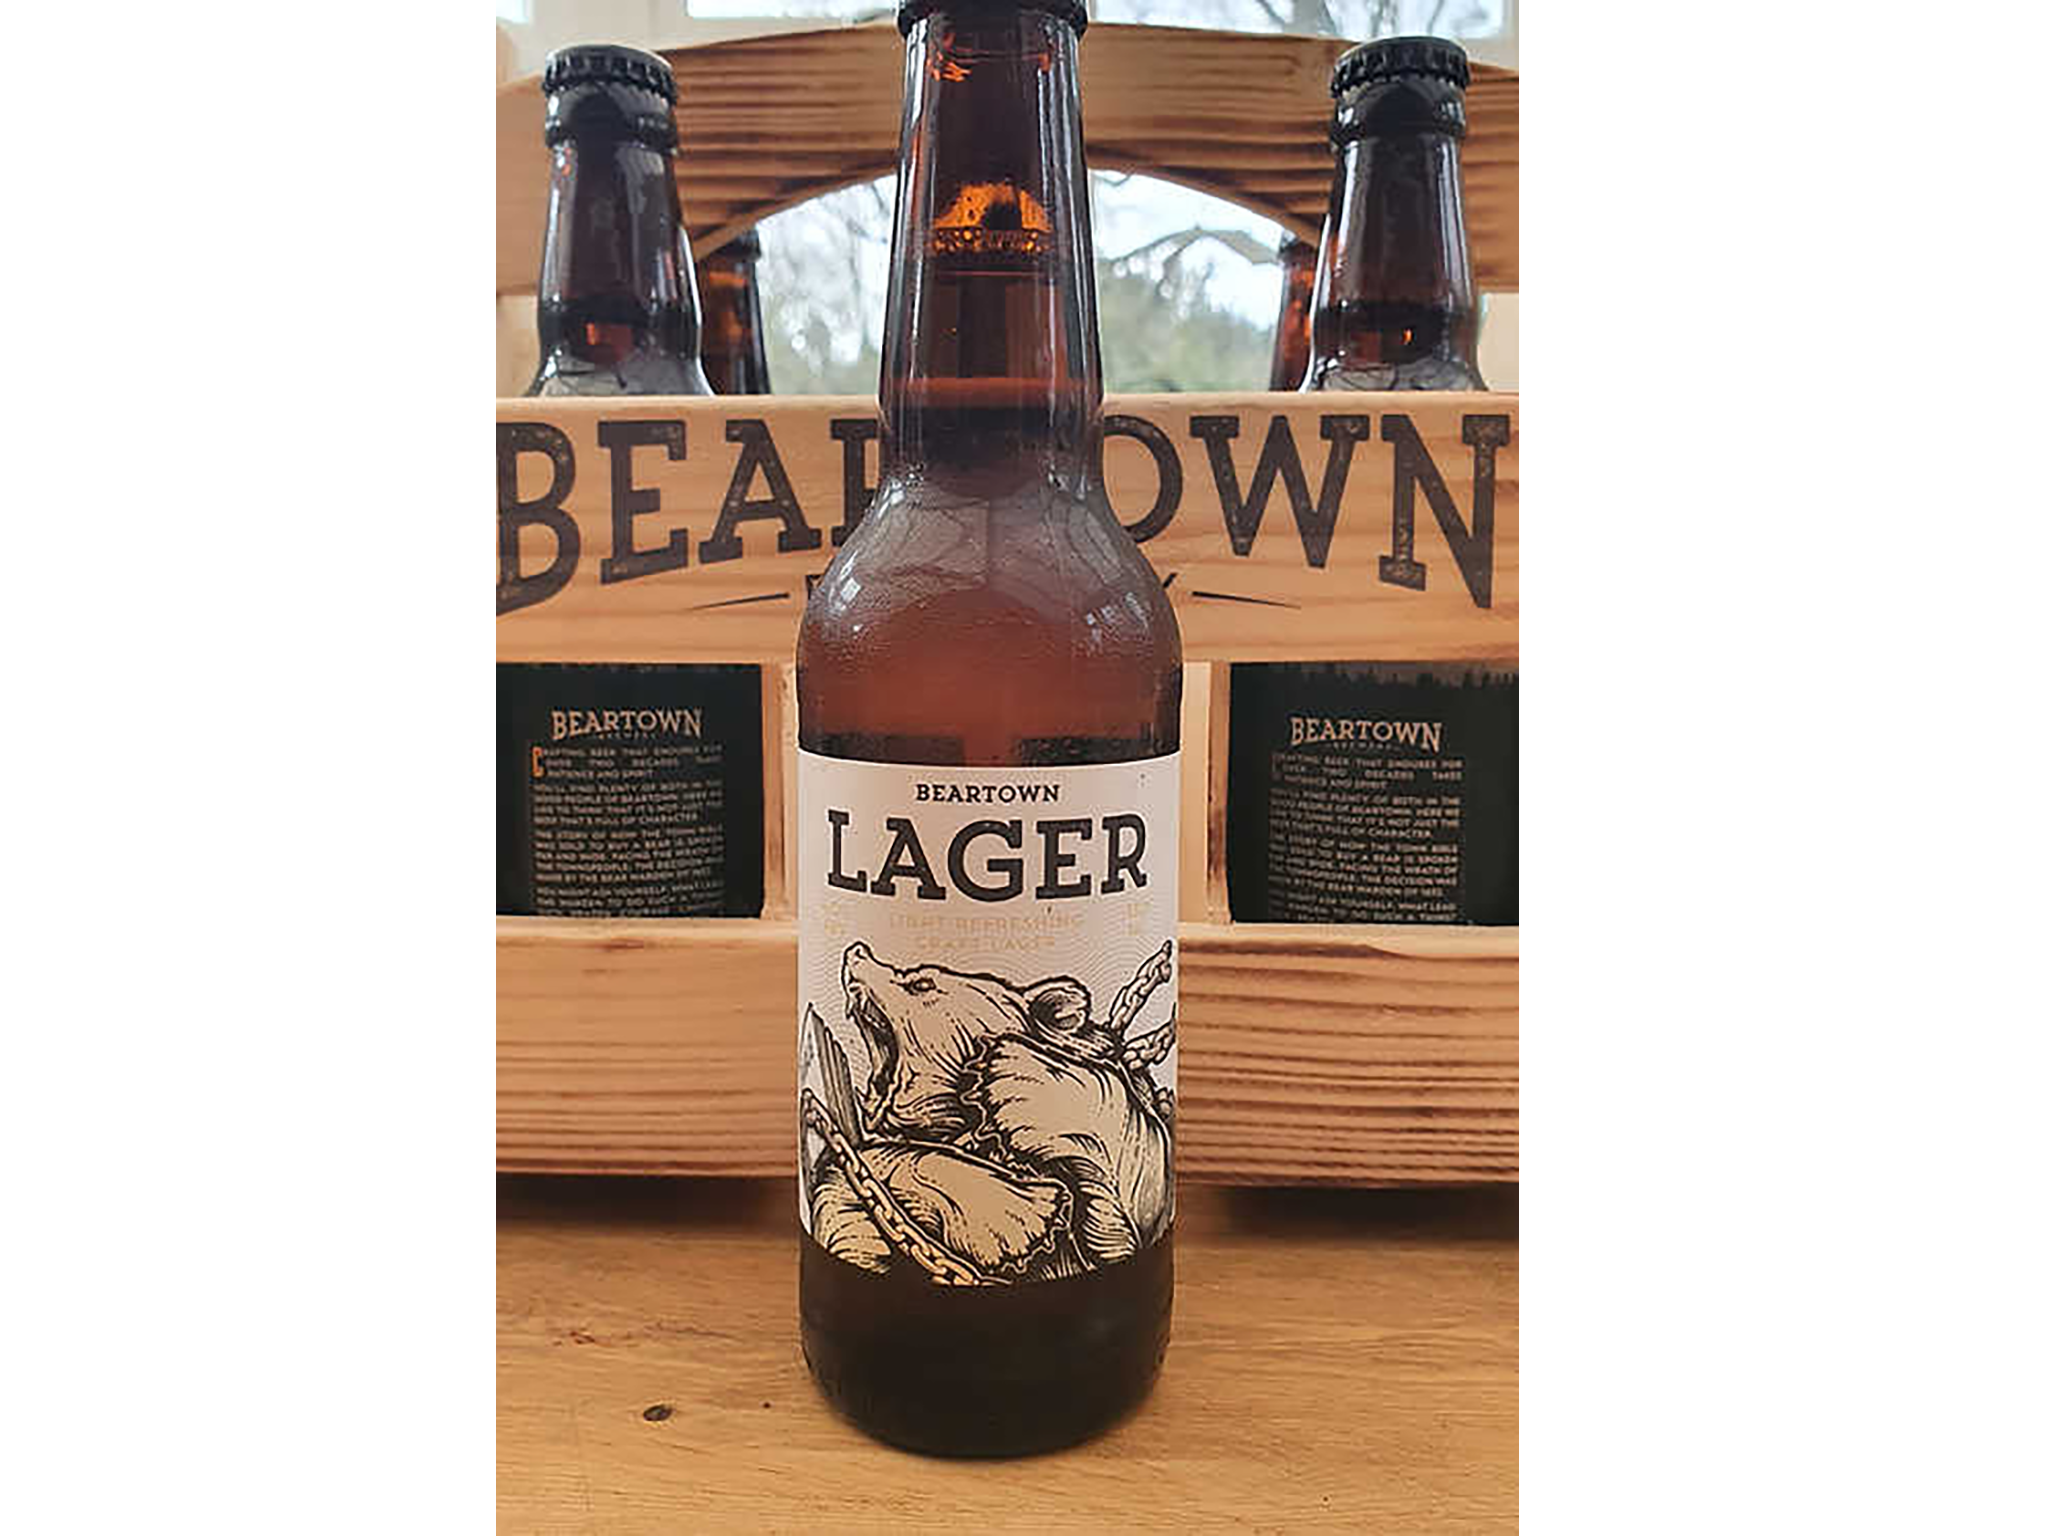 Beartown lager